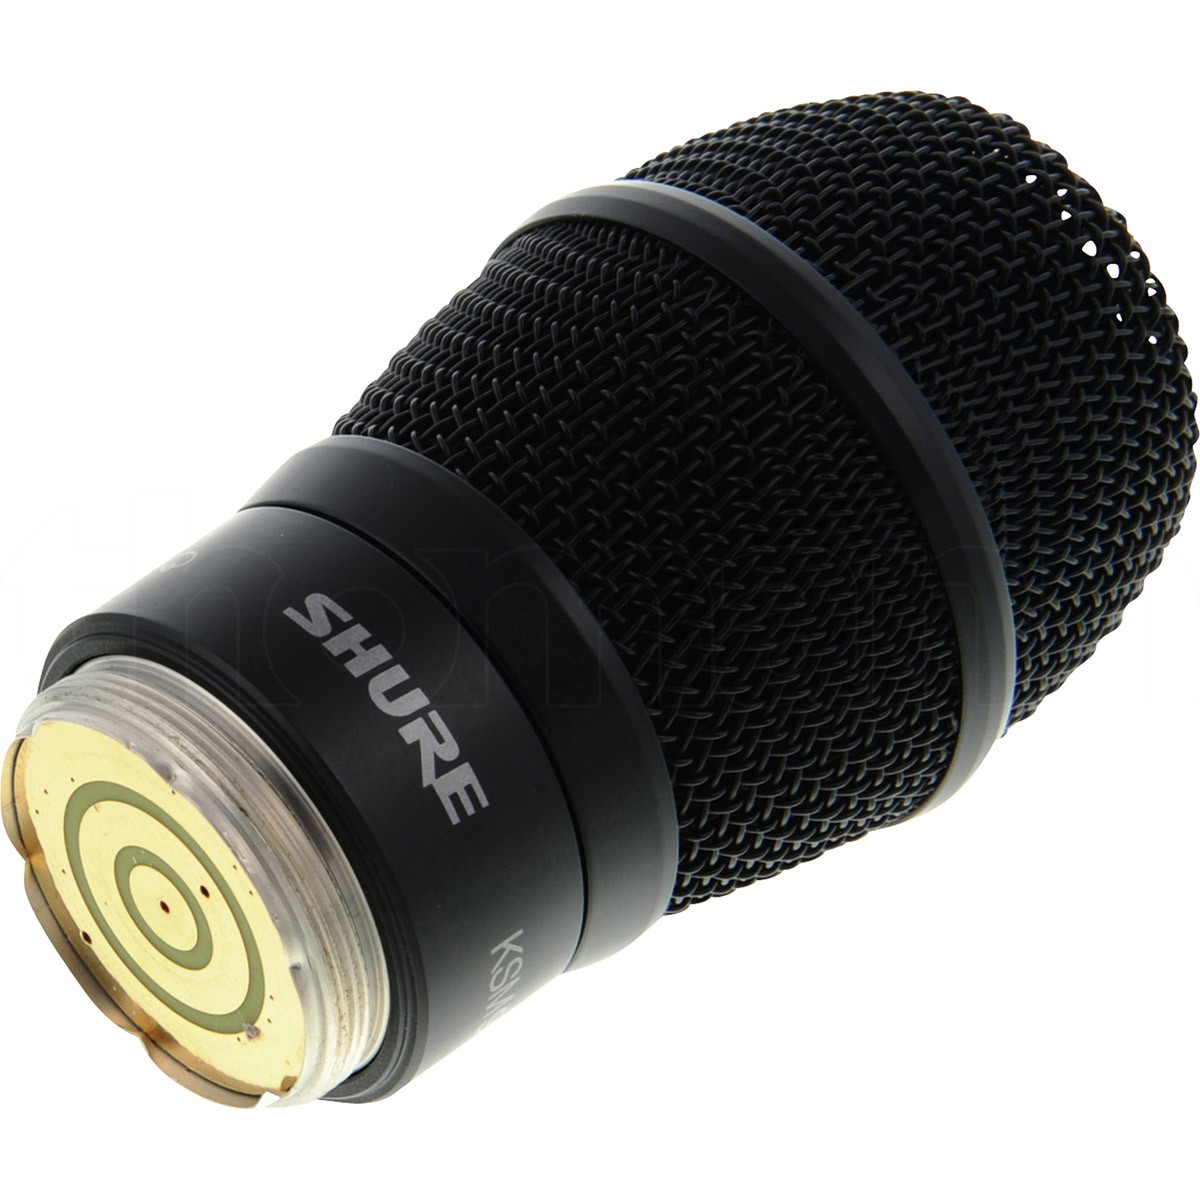 Shure RPW184 - Cartridge For KSM9 Handheld Wireless Transmitters